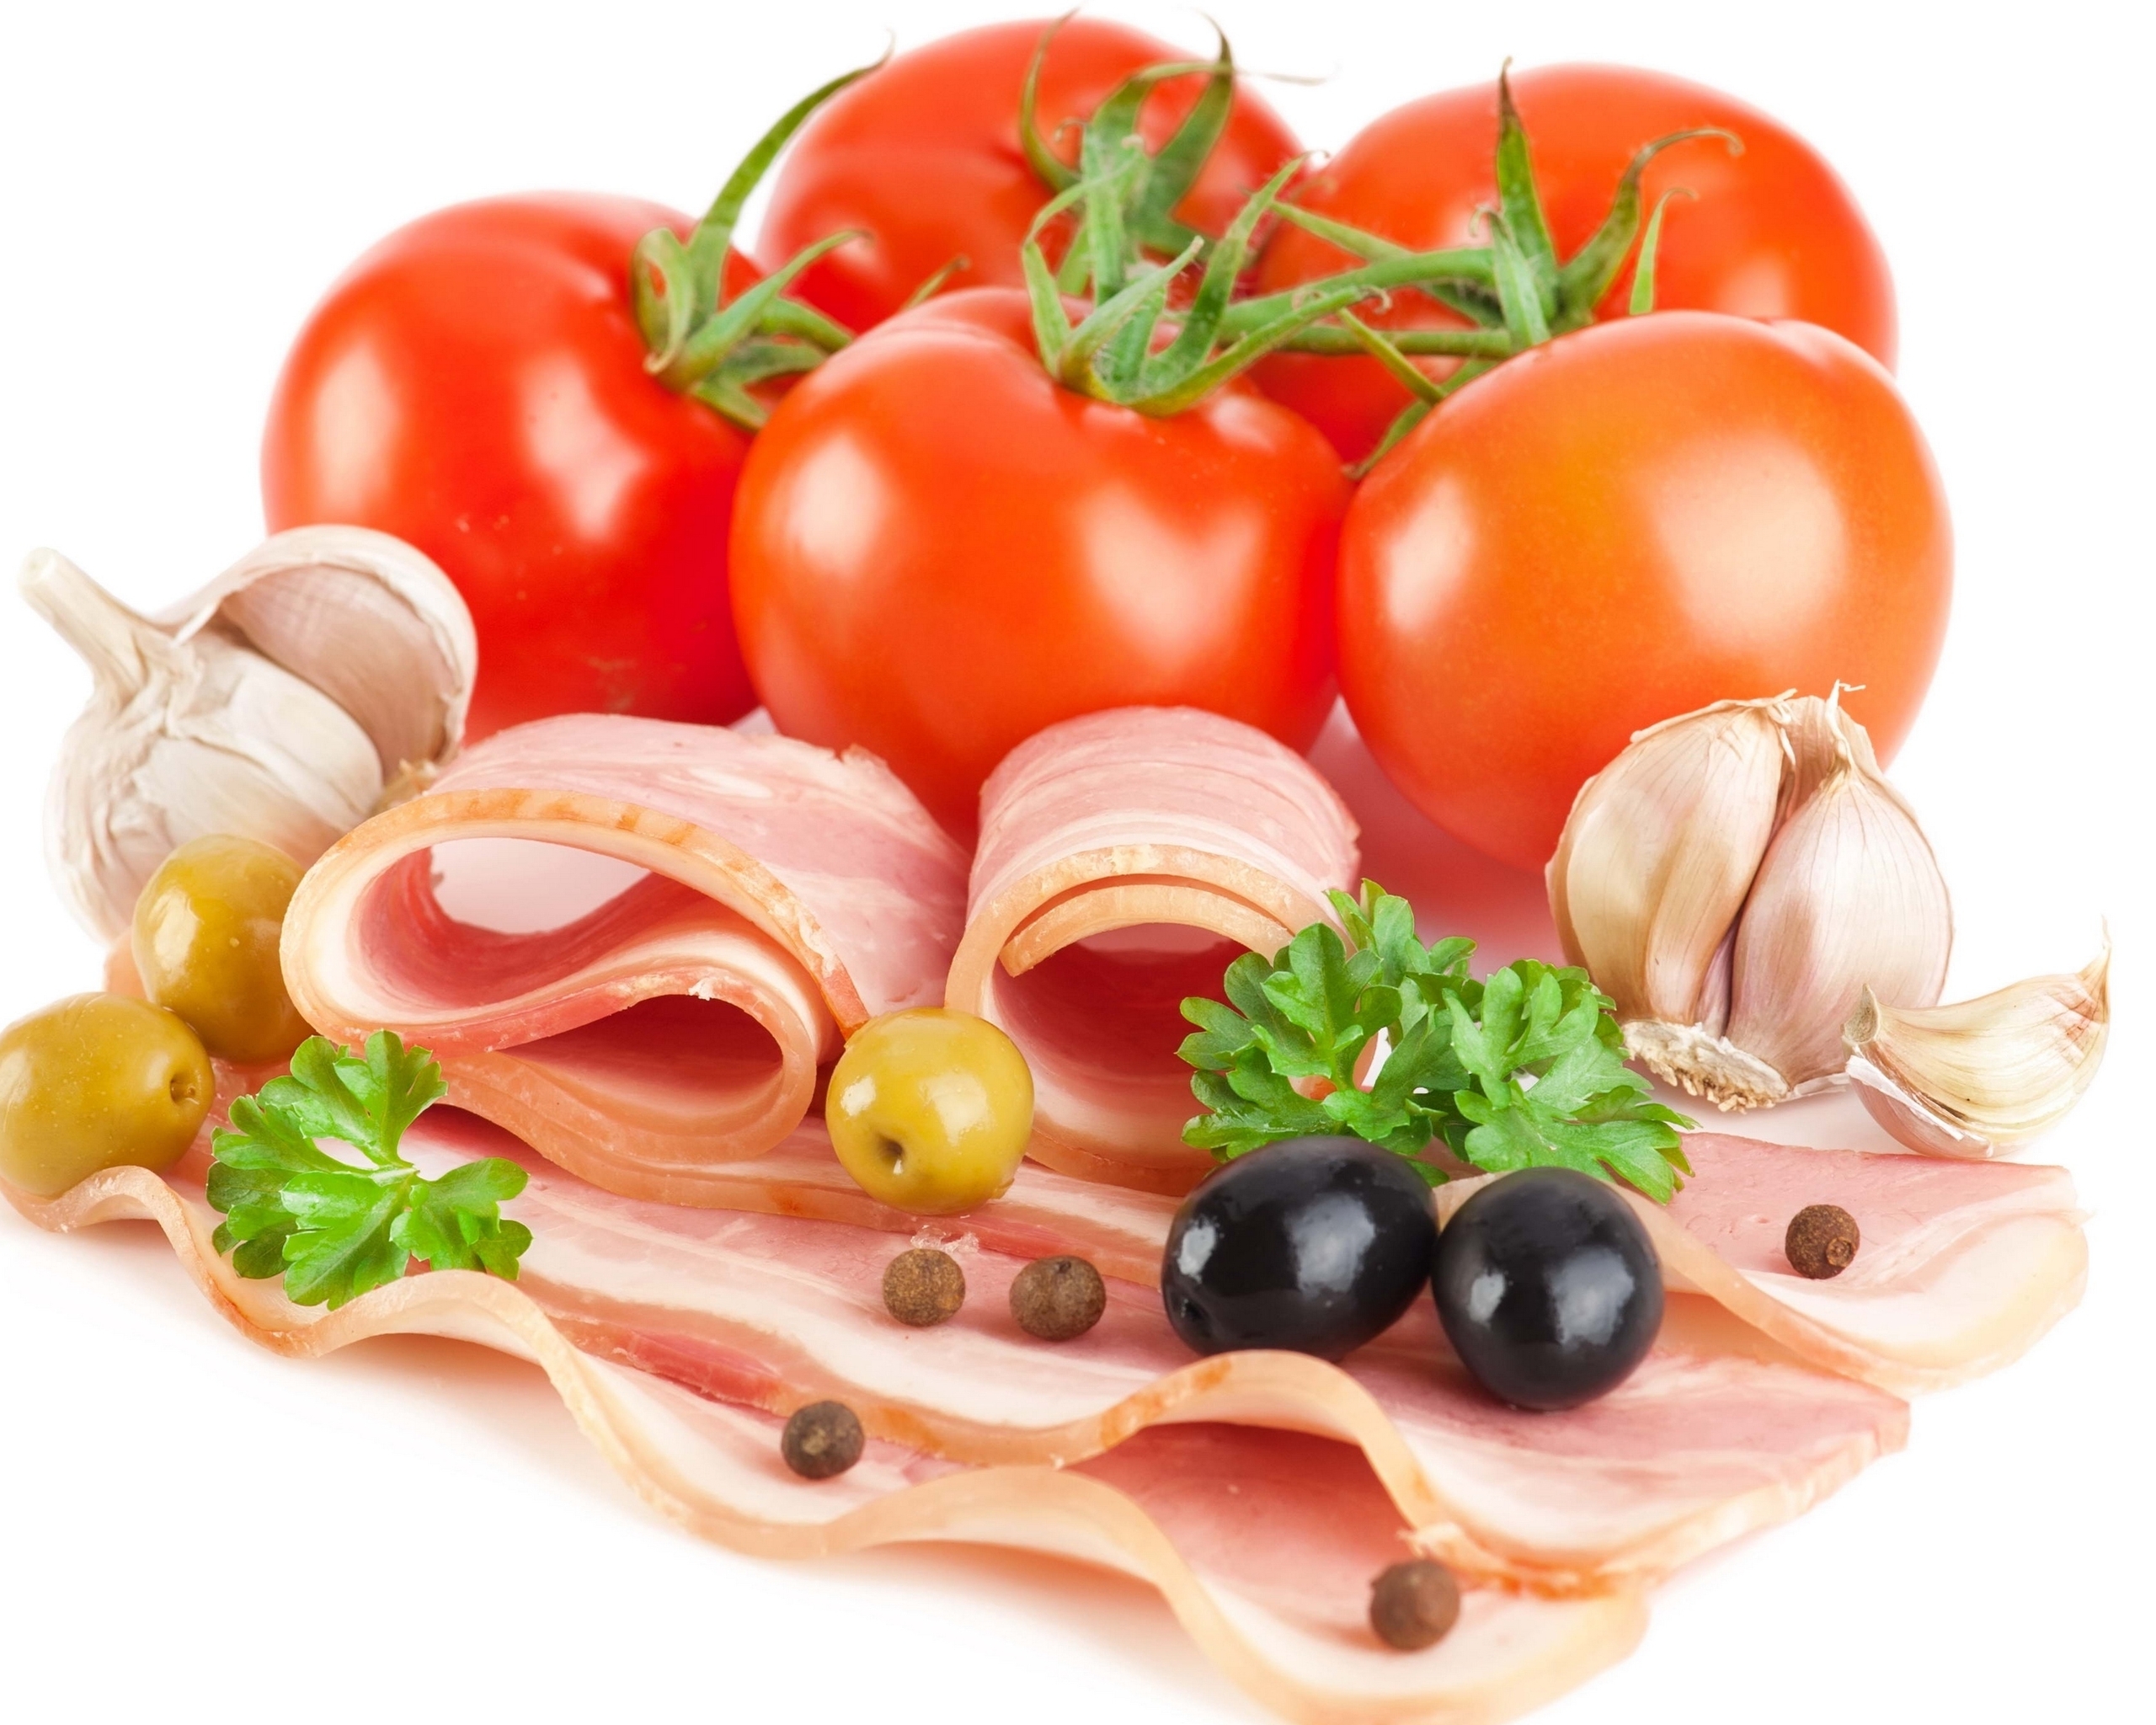 Image: Tomatoes, vegetables, bacon, olives, garlic, white background